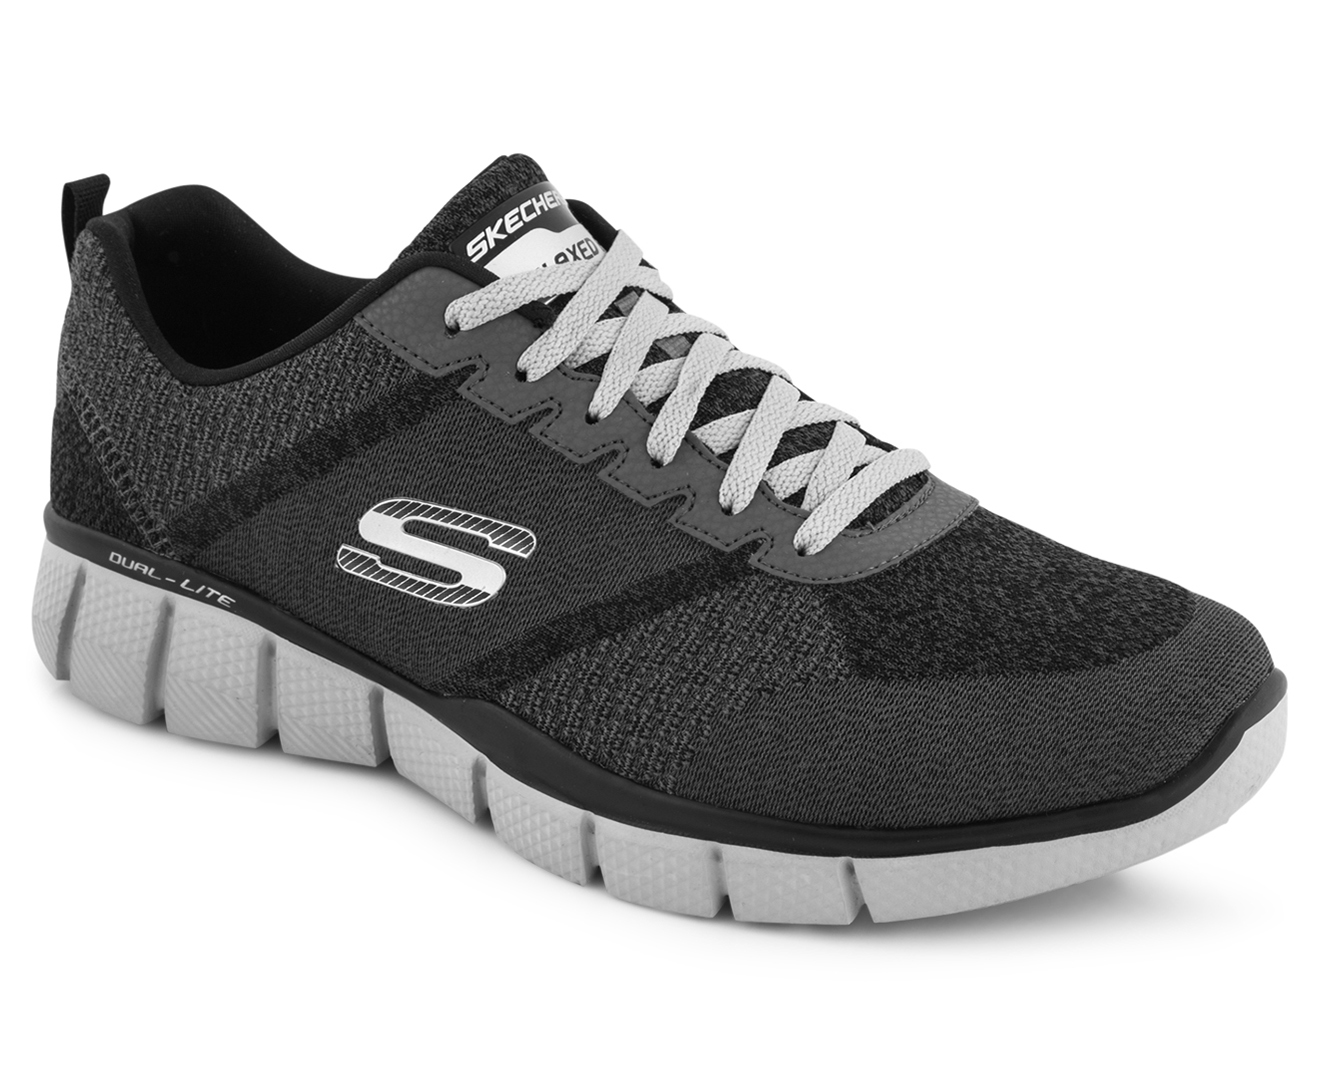 Skechers Men's Equalizer 2.0 True Balance Shoe - Charcoal/Black | Catch ...